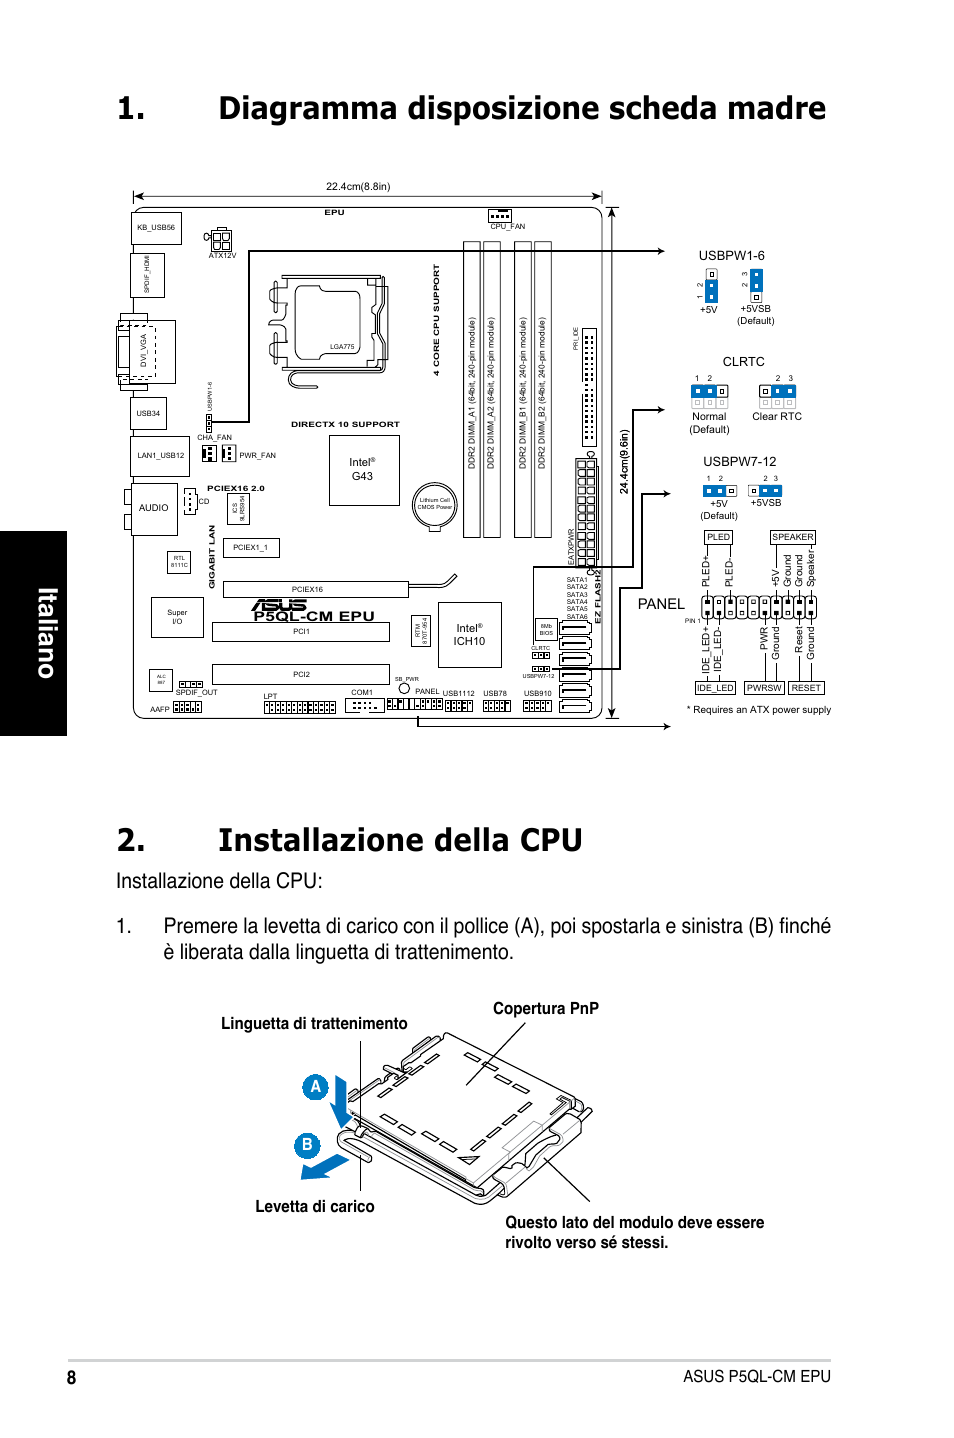 Italiano, Asus p5ql-cm epu, Panel | Asus P5QL-VM EPU User Manual | Page 8 /  38 | Original mode